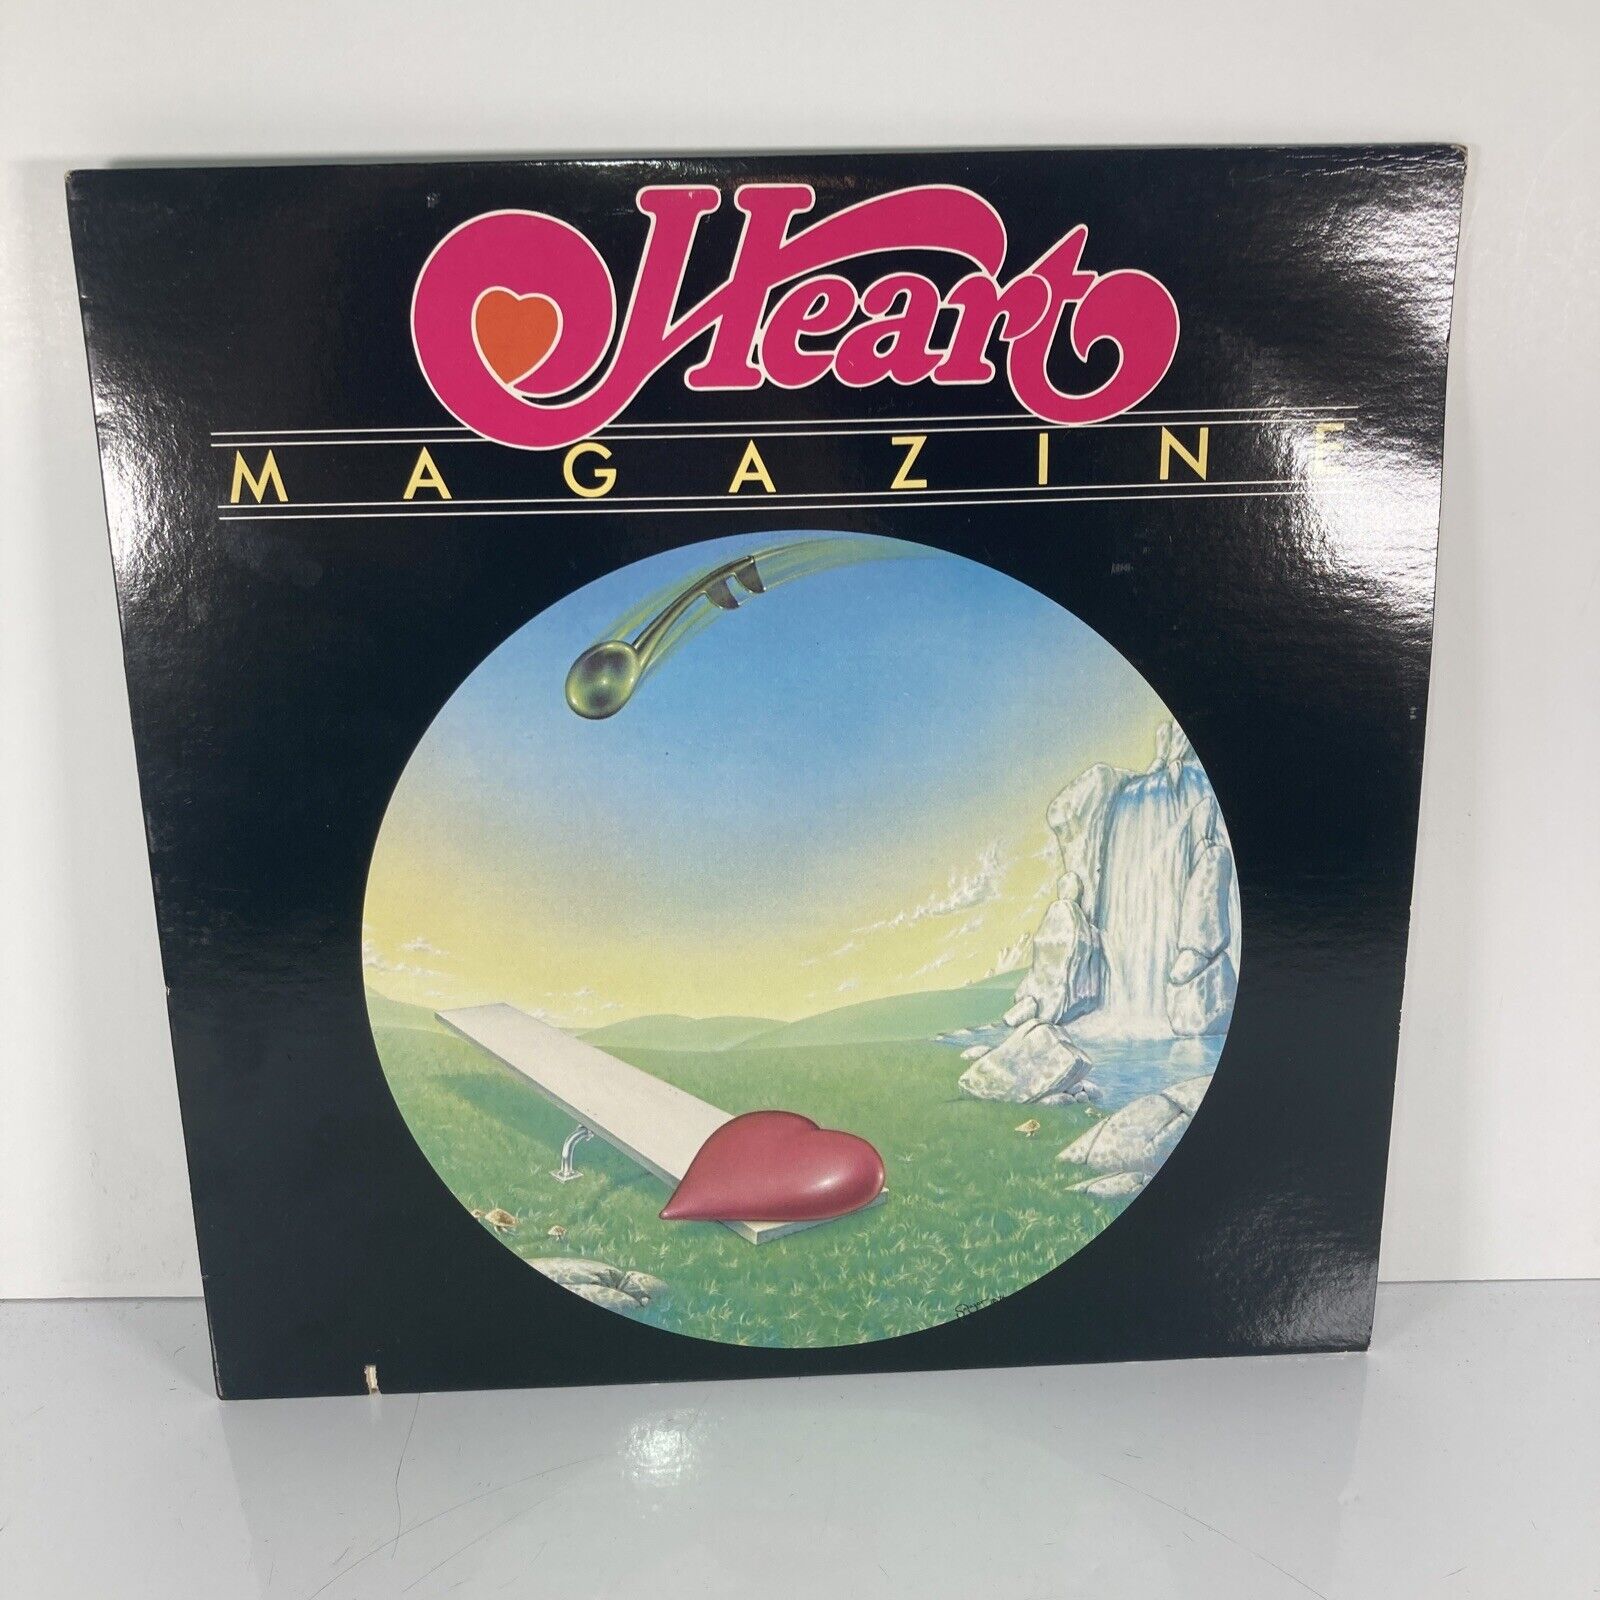 Heart Magazine Used Vinyl Record Album MRS-5008 Mushroom Records Vintage